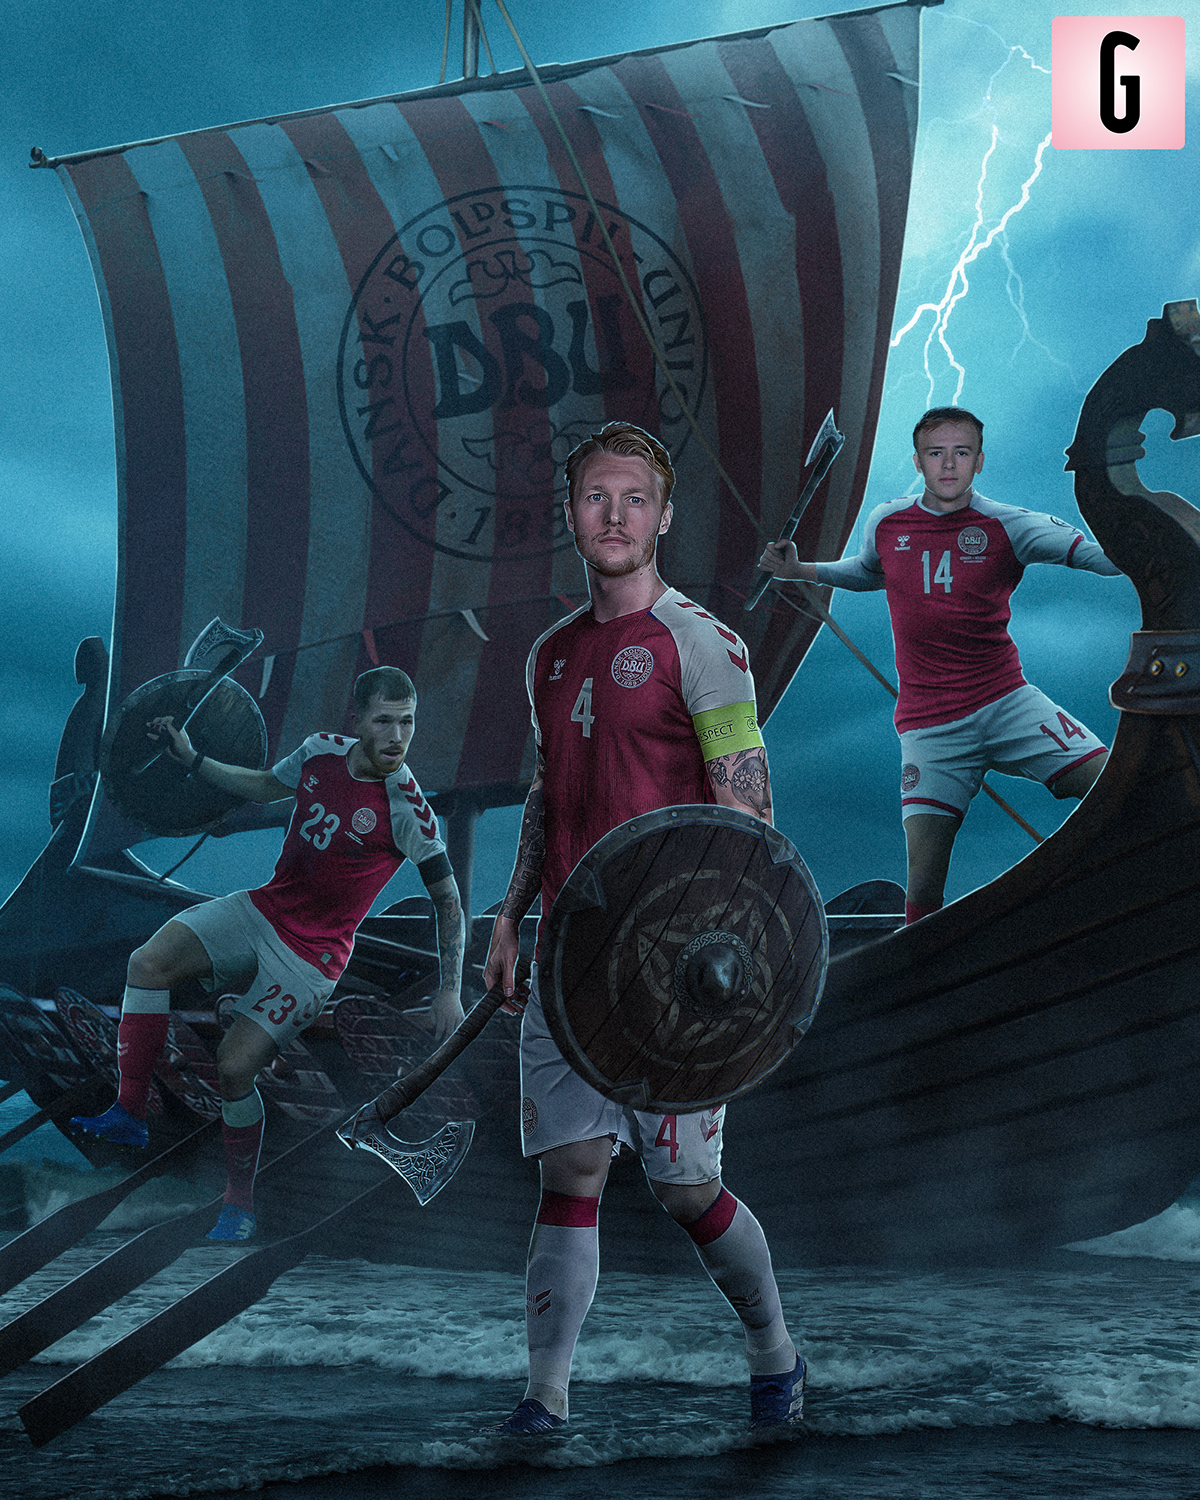 daangraphics EURO 2020 football graphics la gazzetta dello sport soccer social media sports